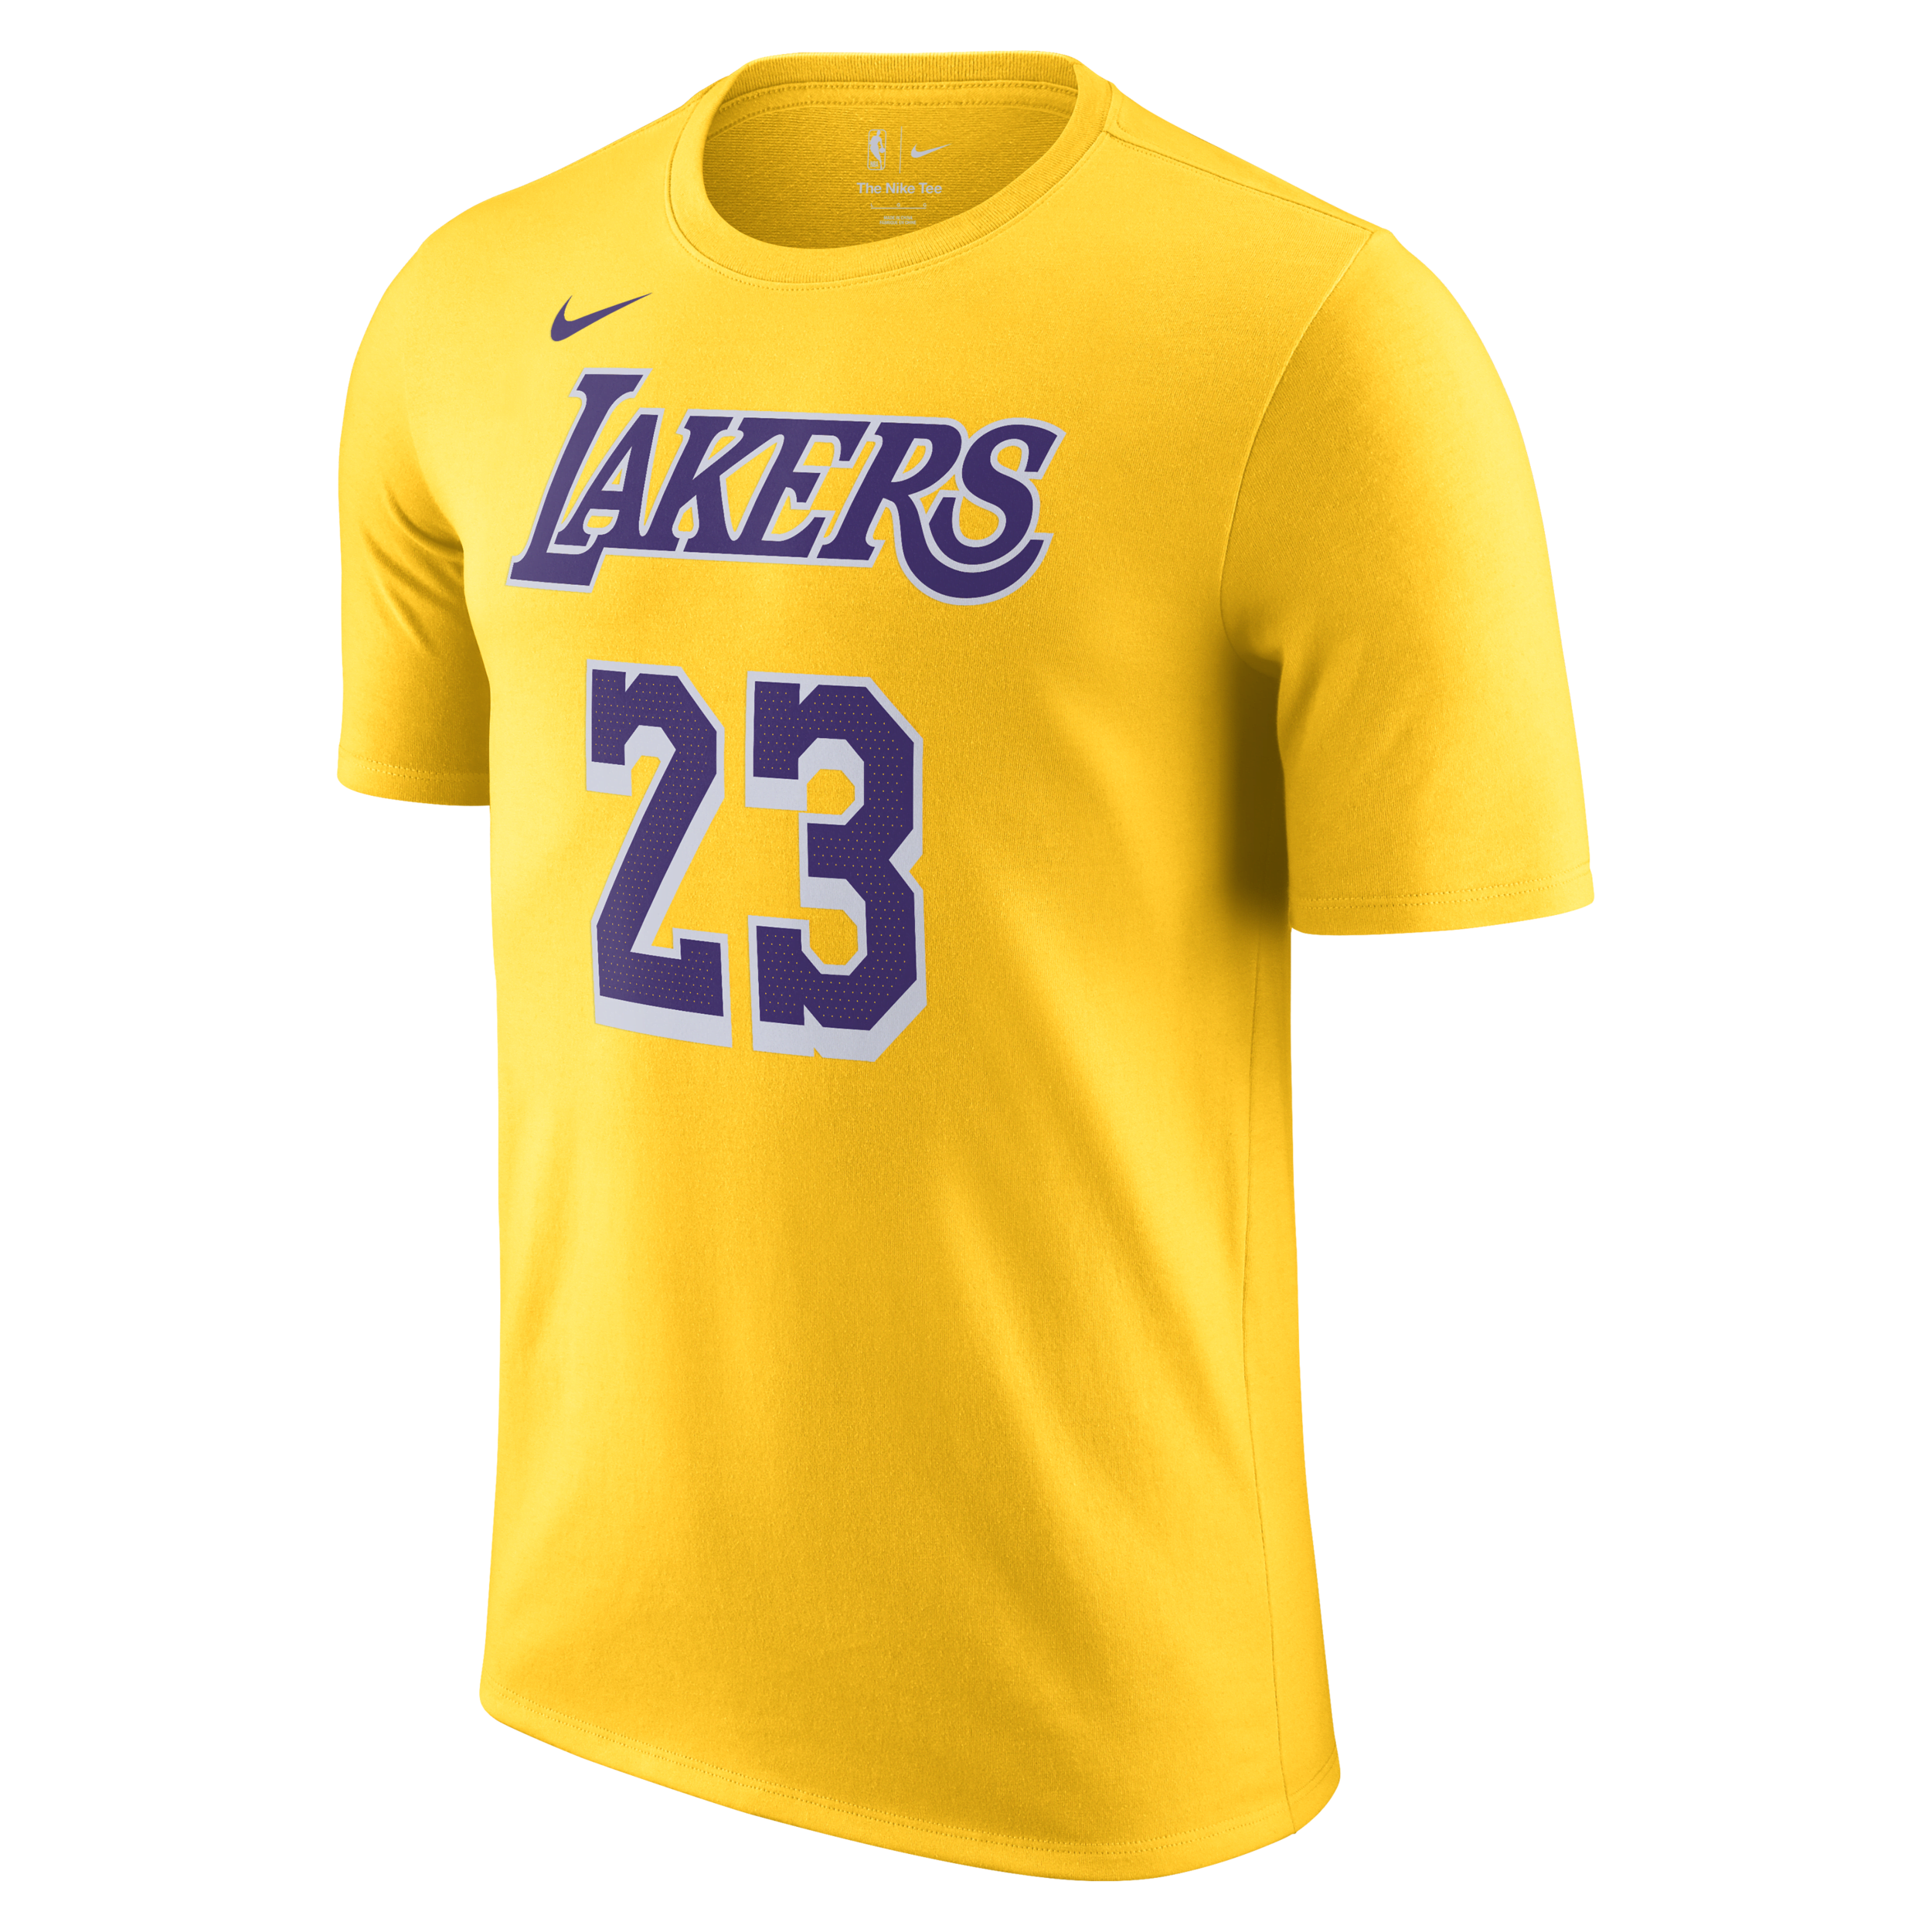 T-shirt Nike NBA Los Angeles Lakers - Uomo - Giallo